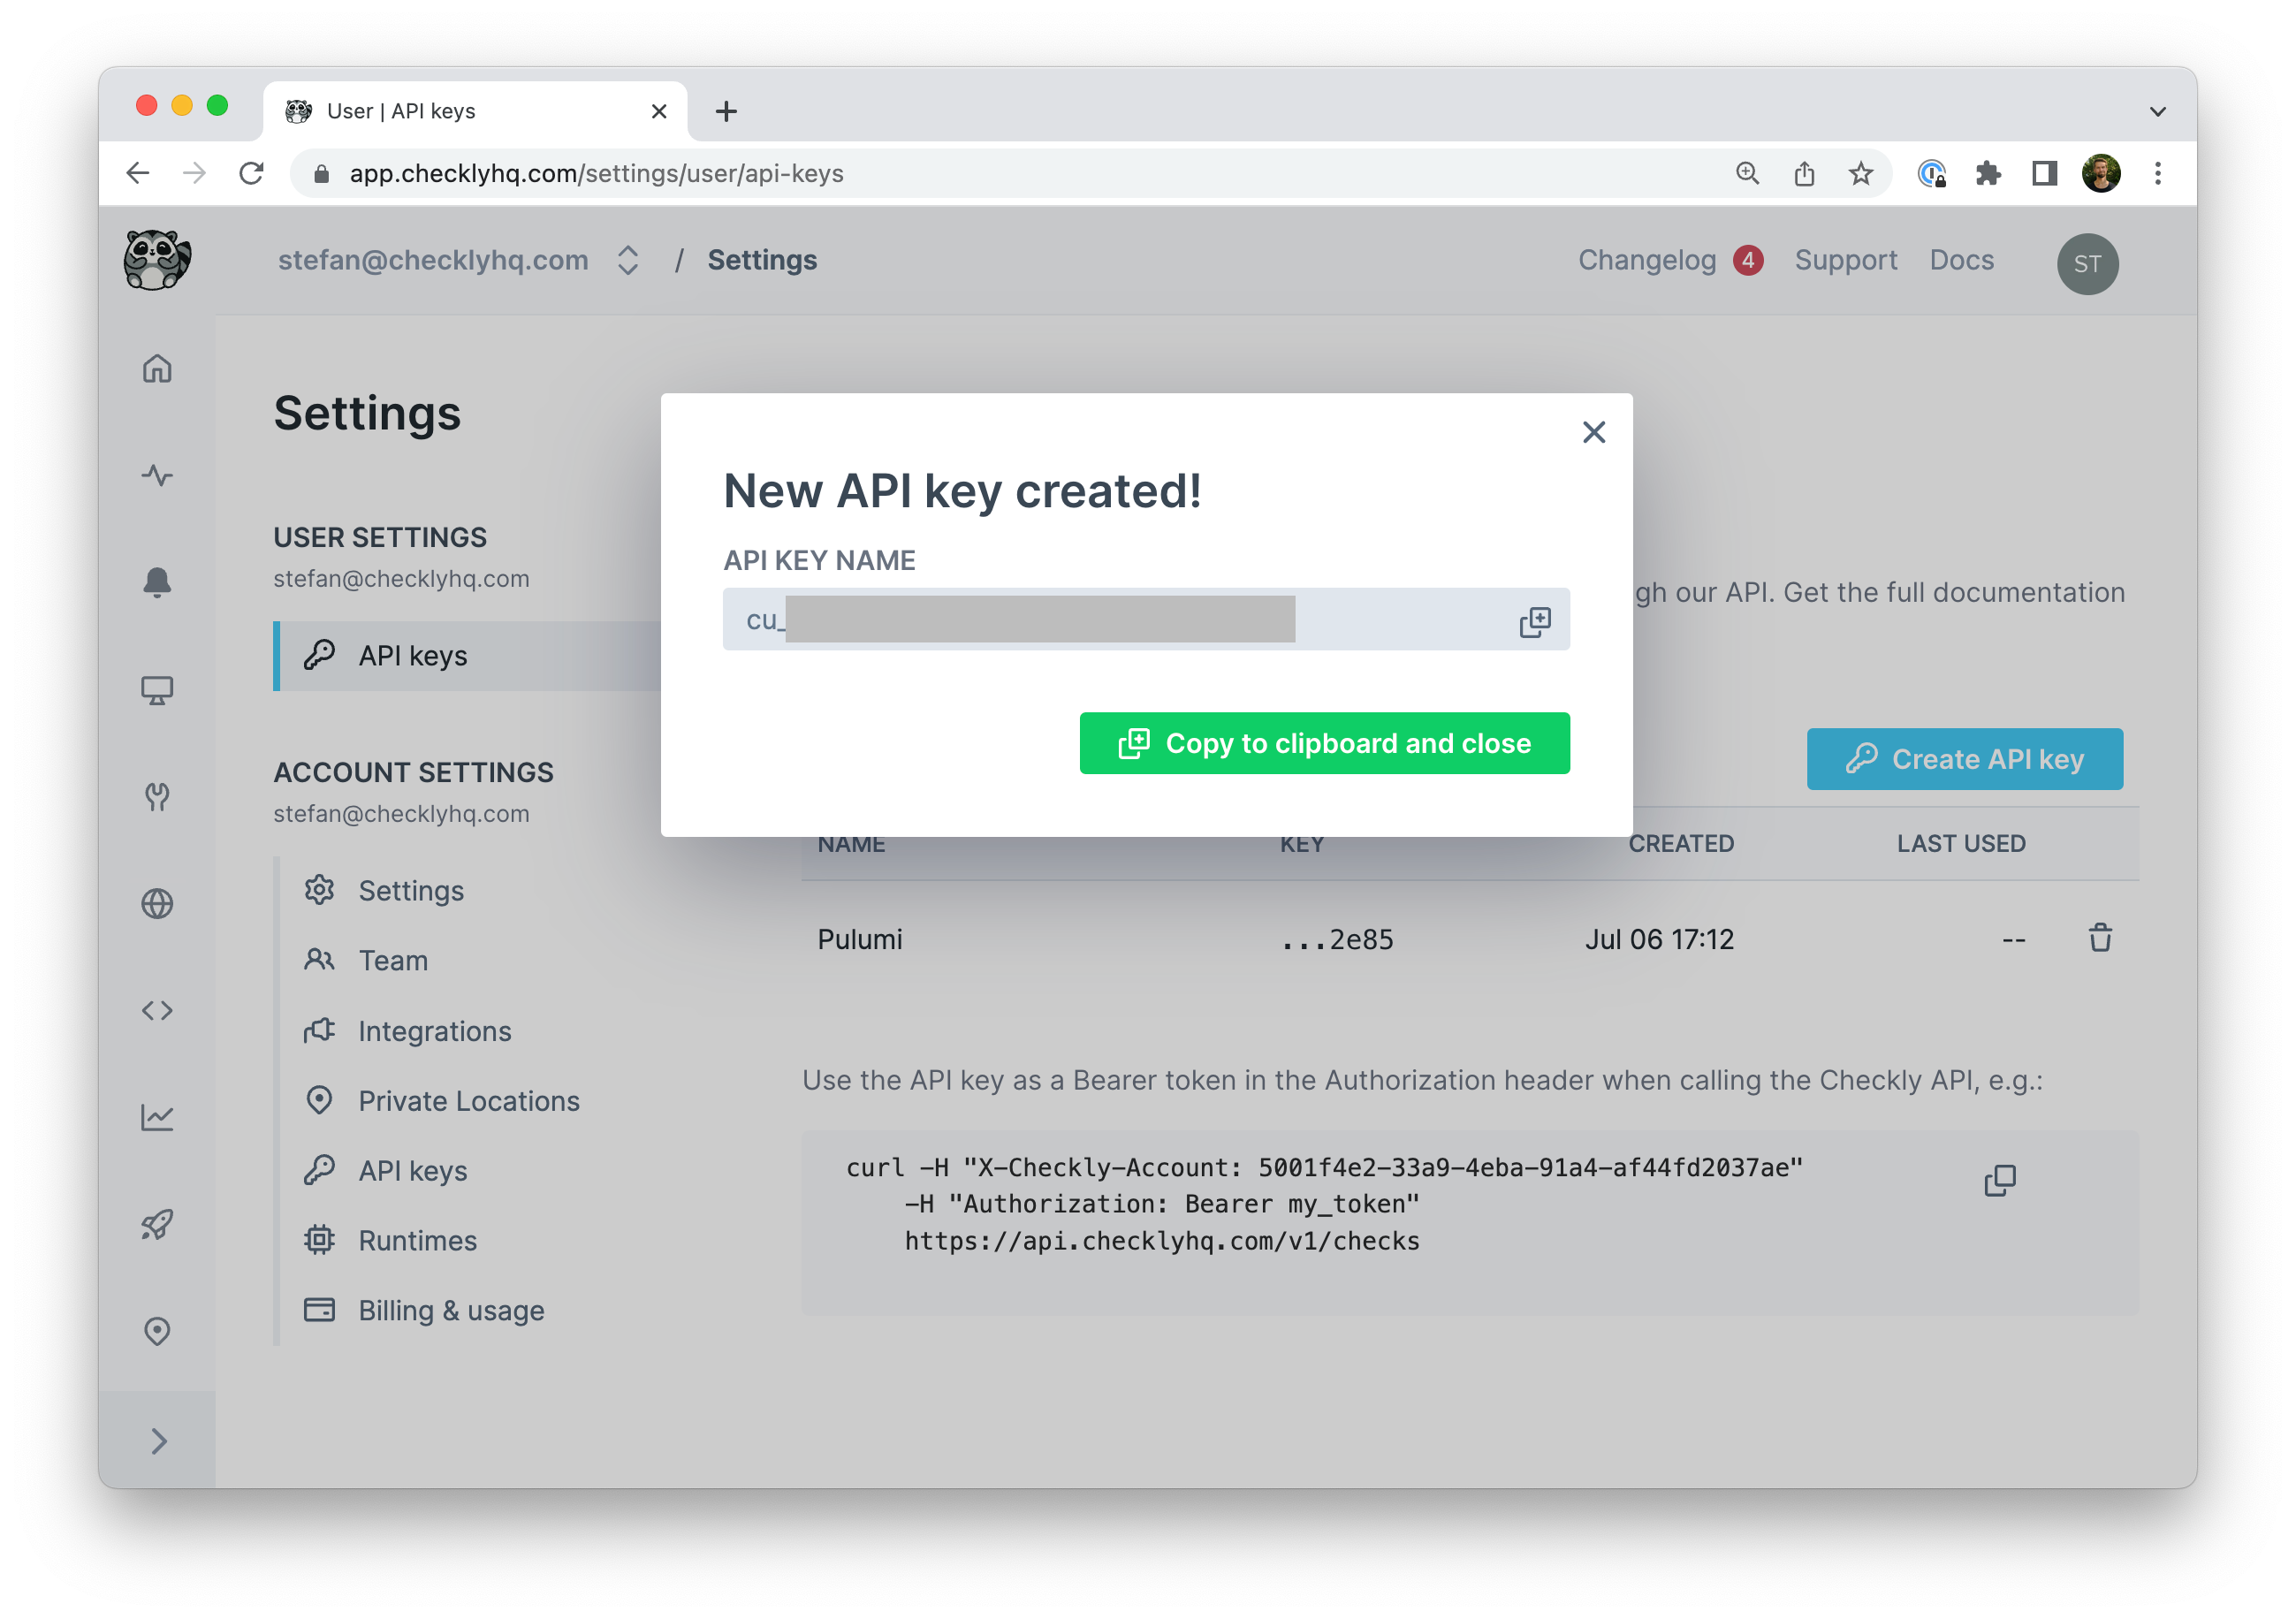 Checkly api key section showing a newly created API key